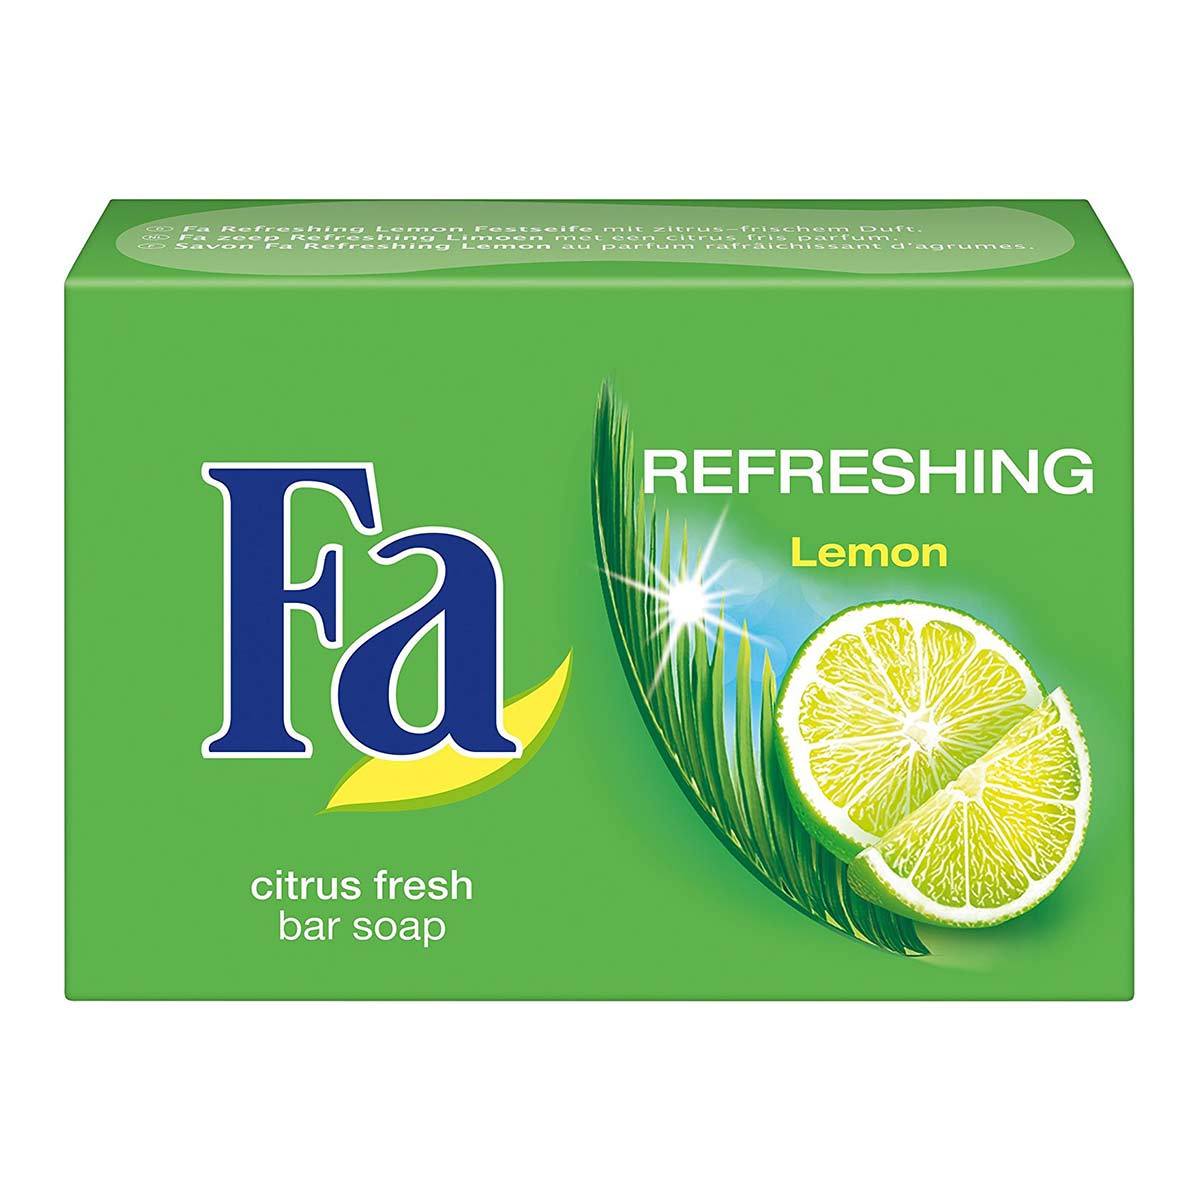 Primary image of Lemon Refreshing Soap